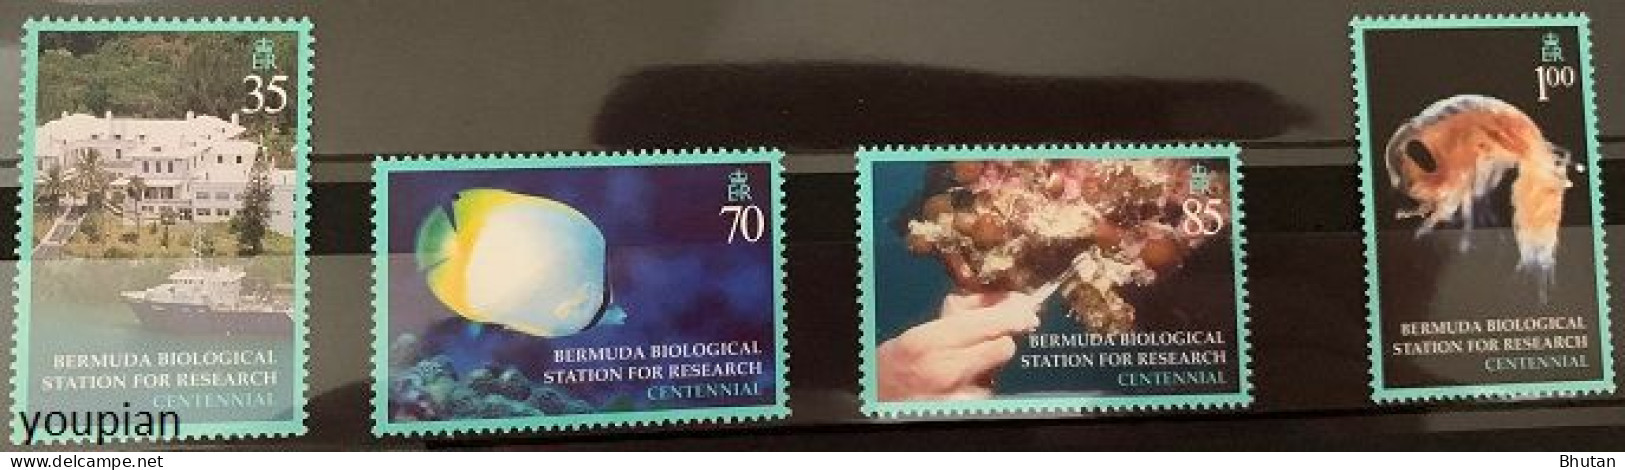 Bermuda 2003, Biological Station For Research Centennial, MNH Stamps Set - Bermuda